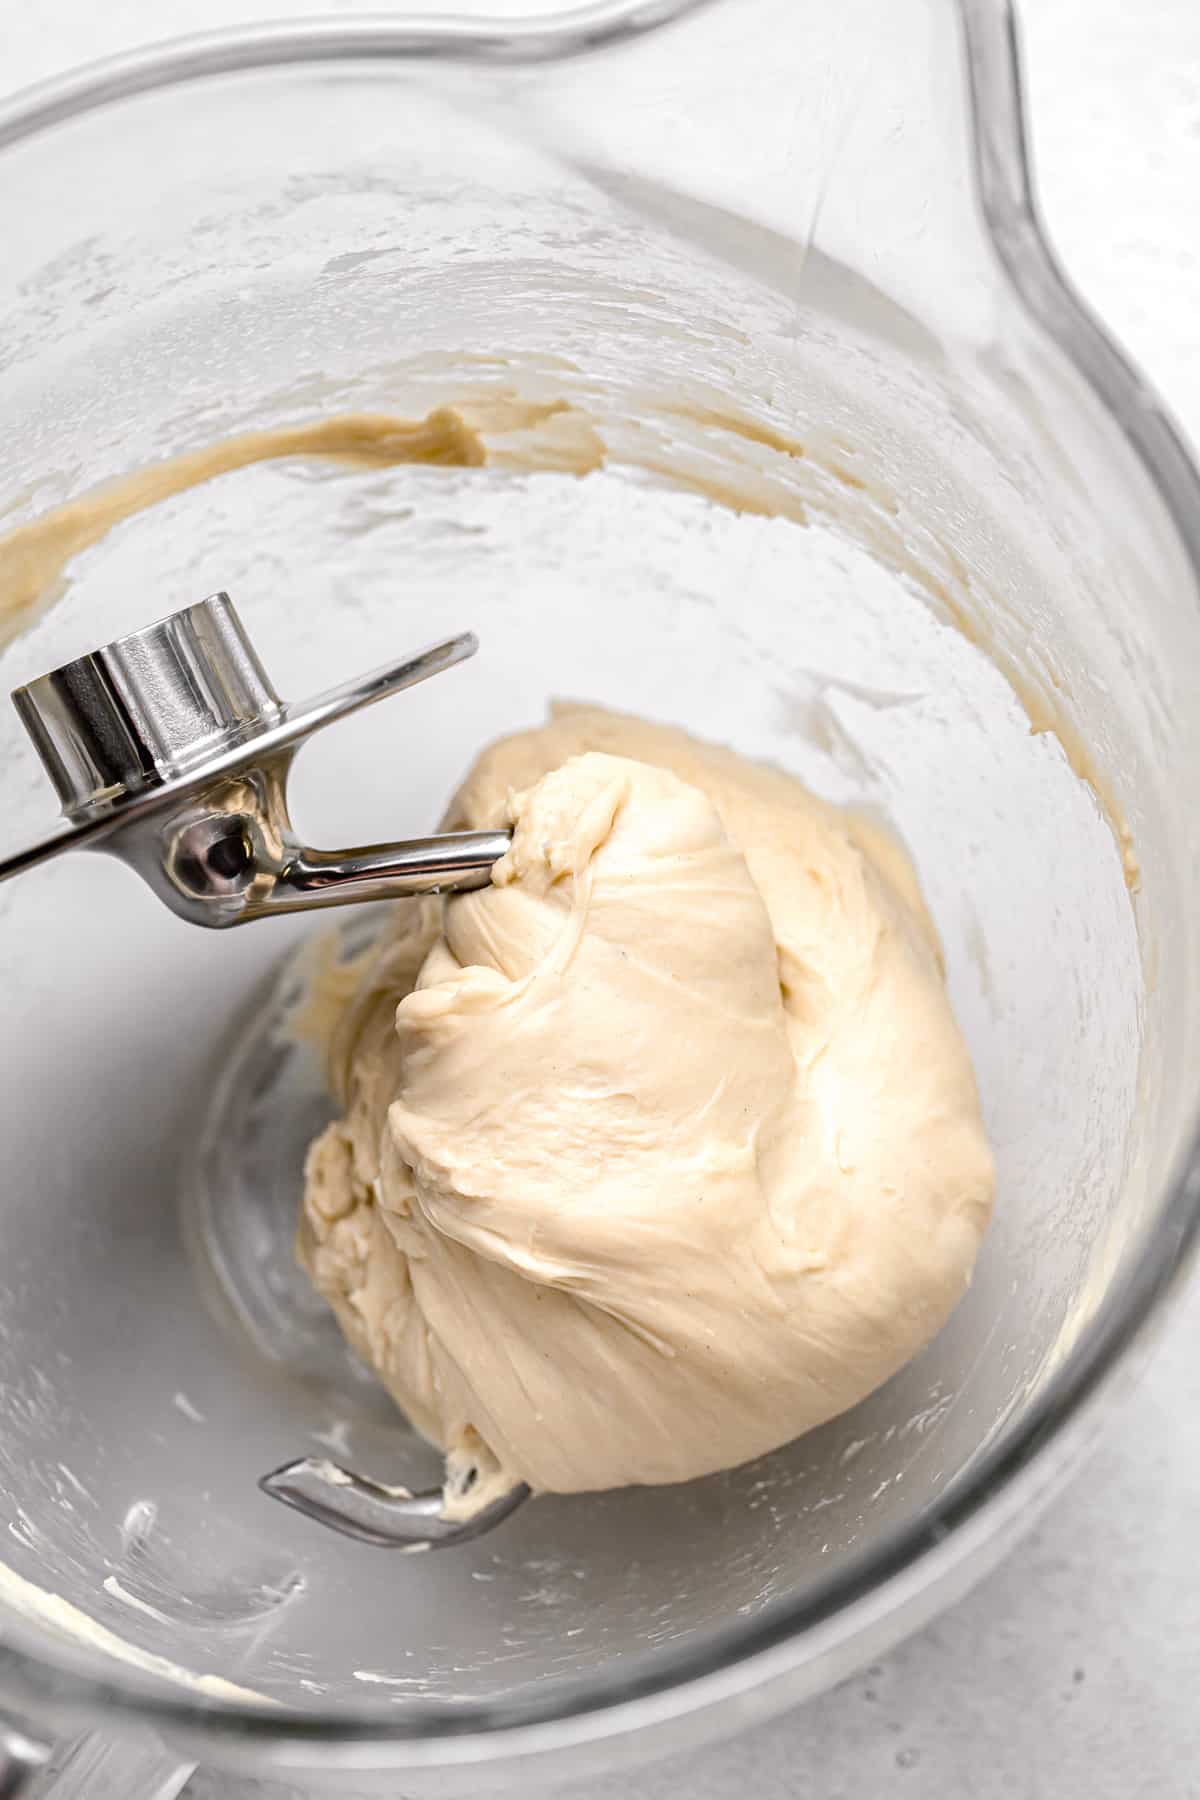 milk bread dough in glass mixing bowl